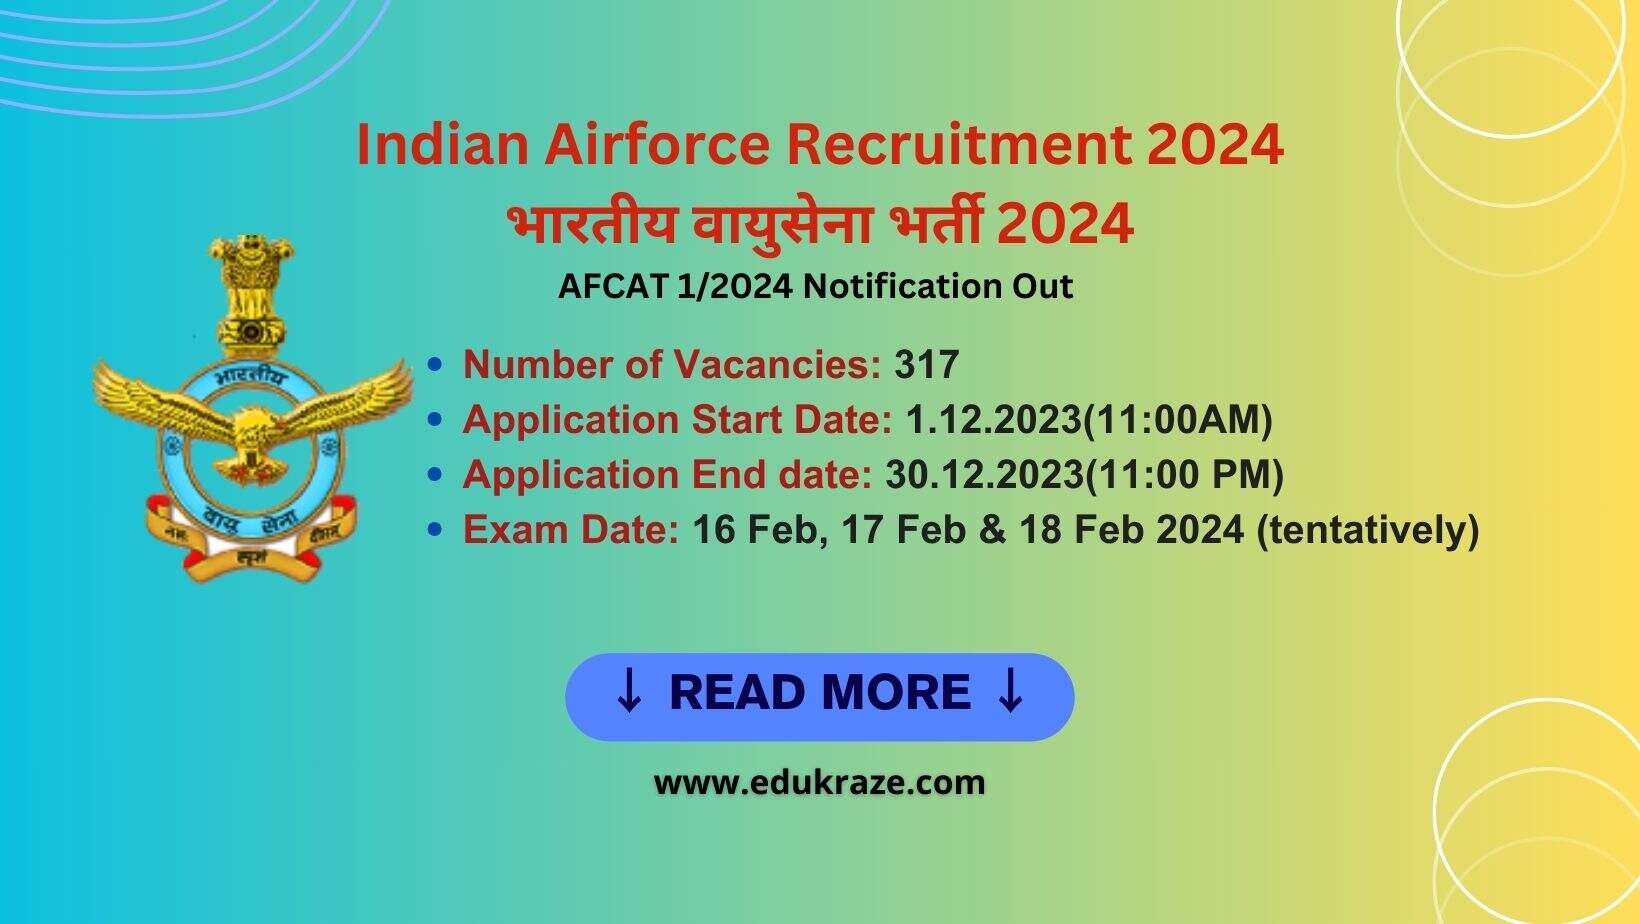 Indian Airforce Recruitment 2024 AFCAT 12024